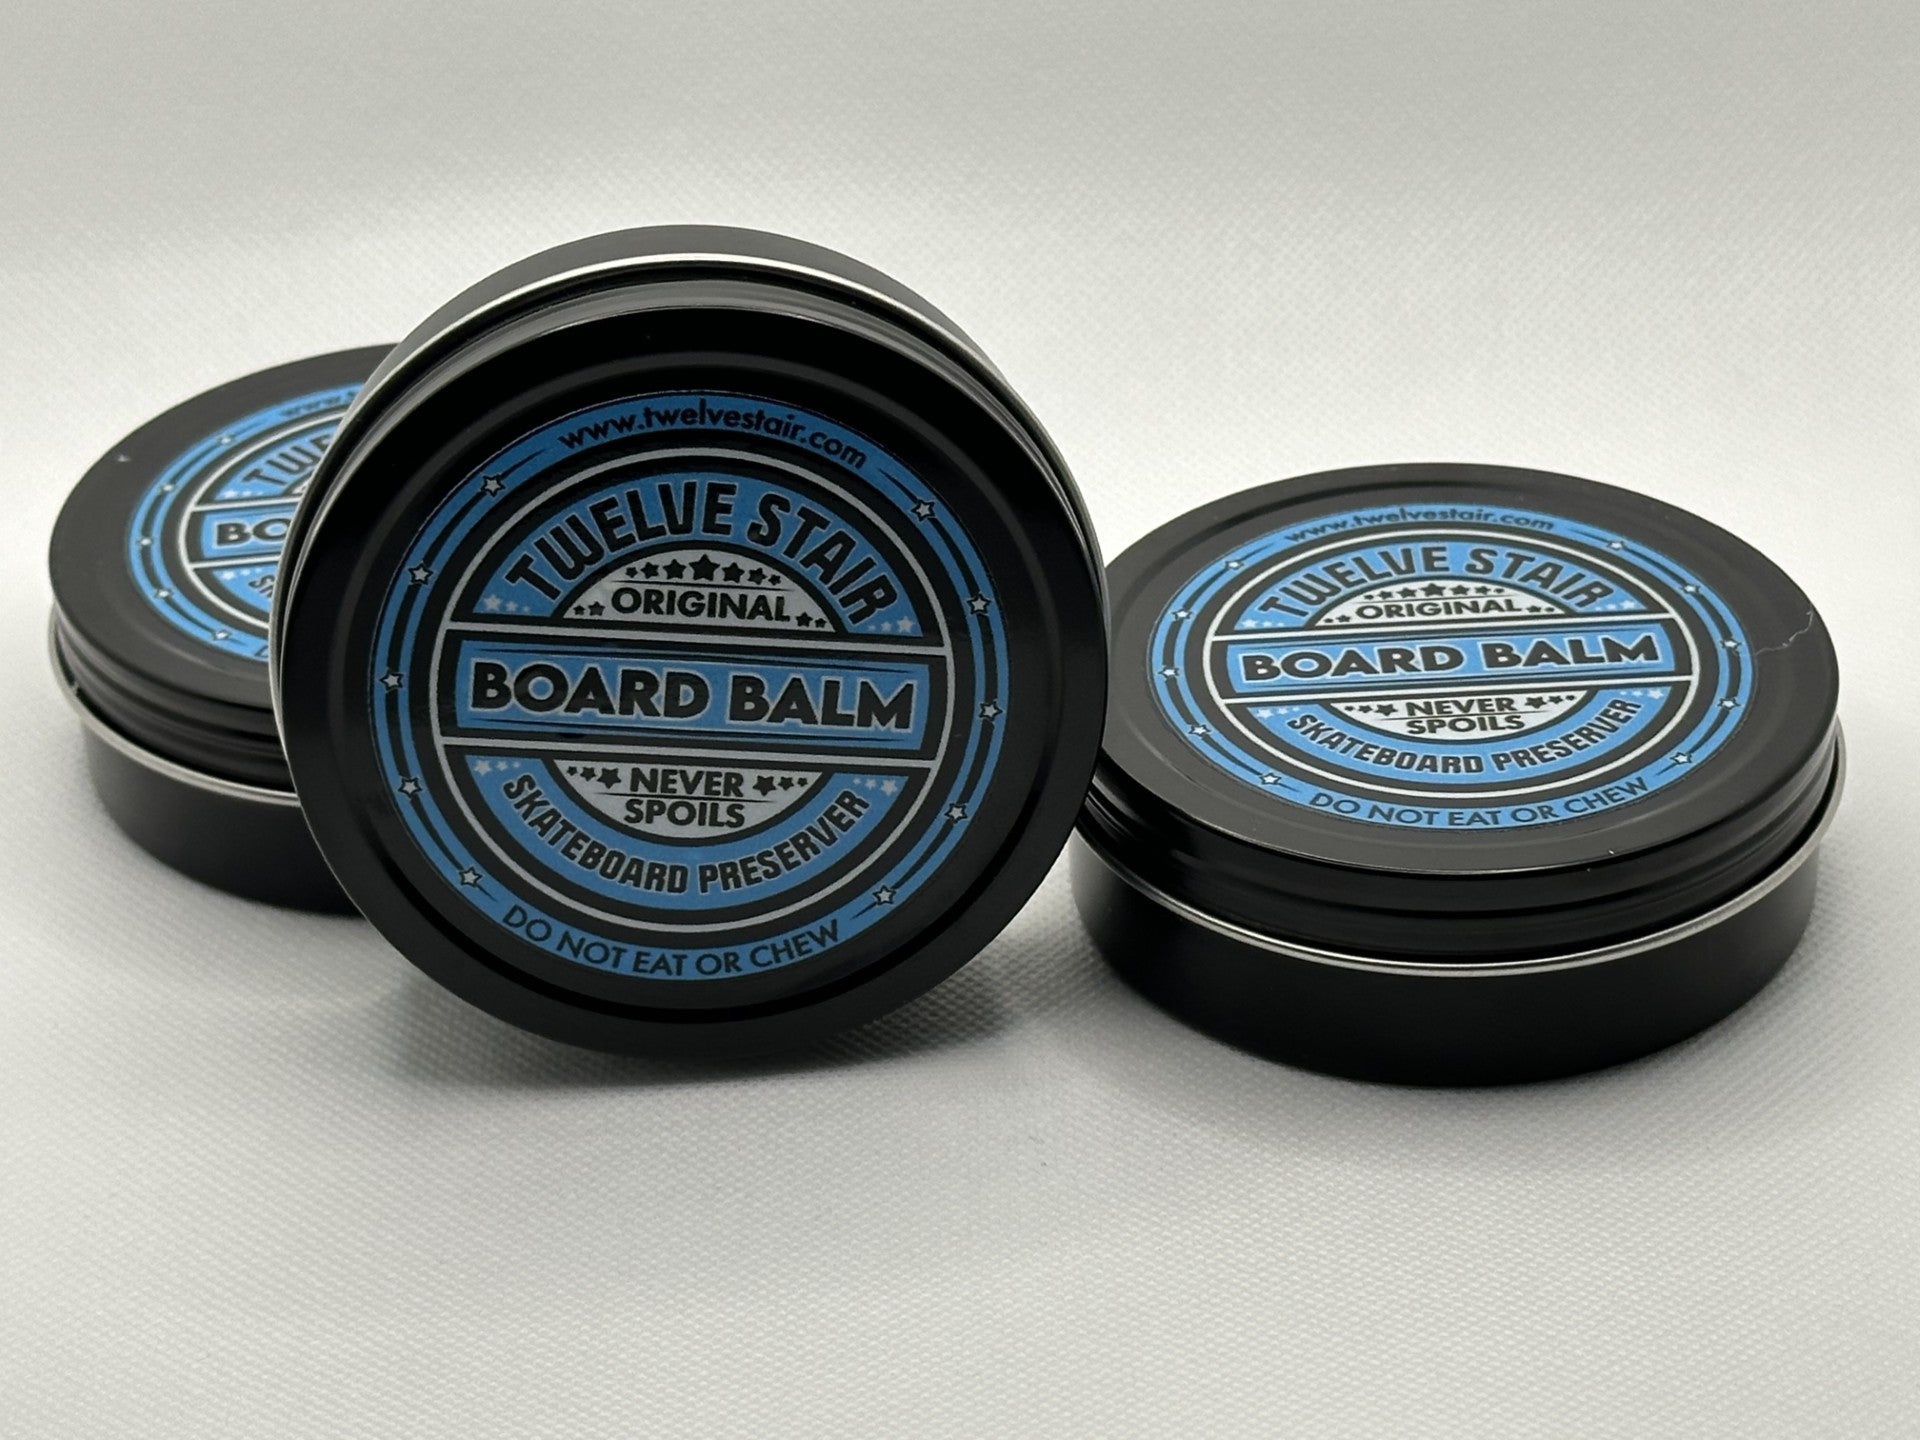 Introducing TwelveStair.com's Unique Board Balm - Skateboard Preserver